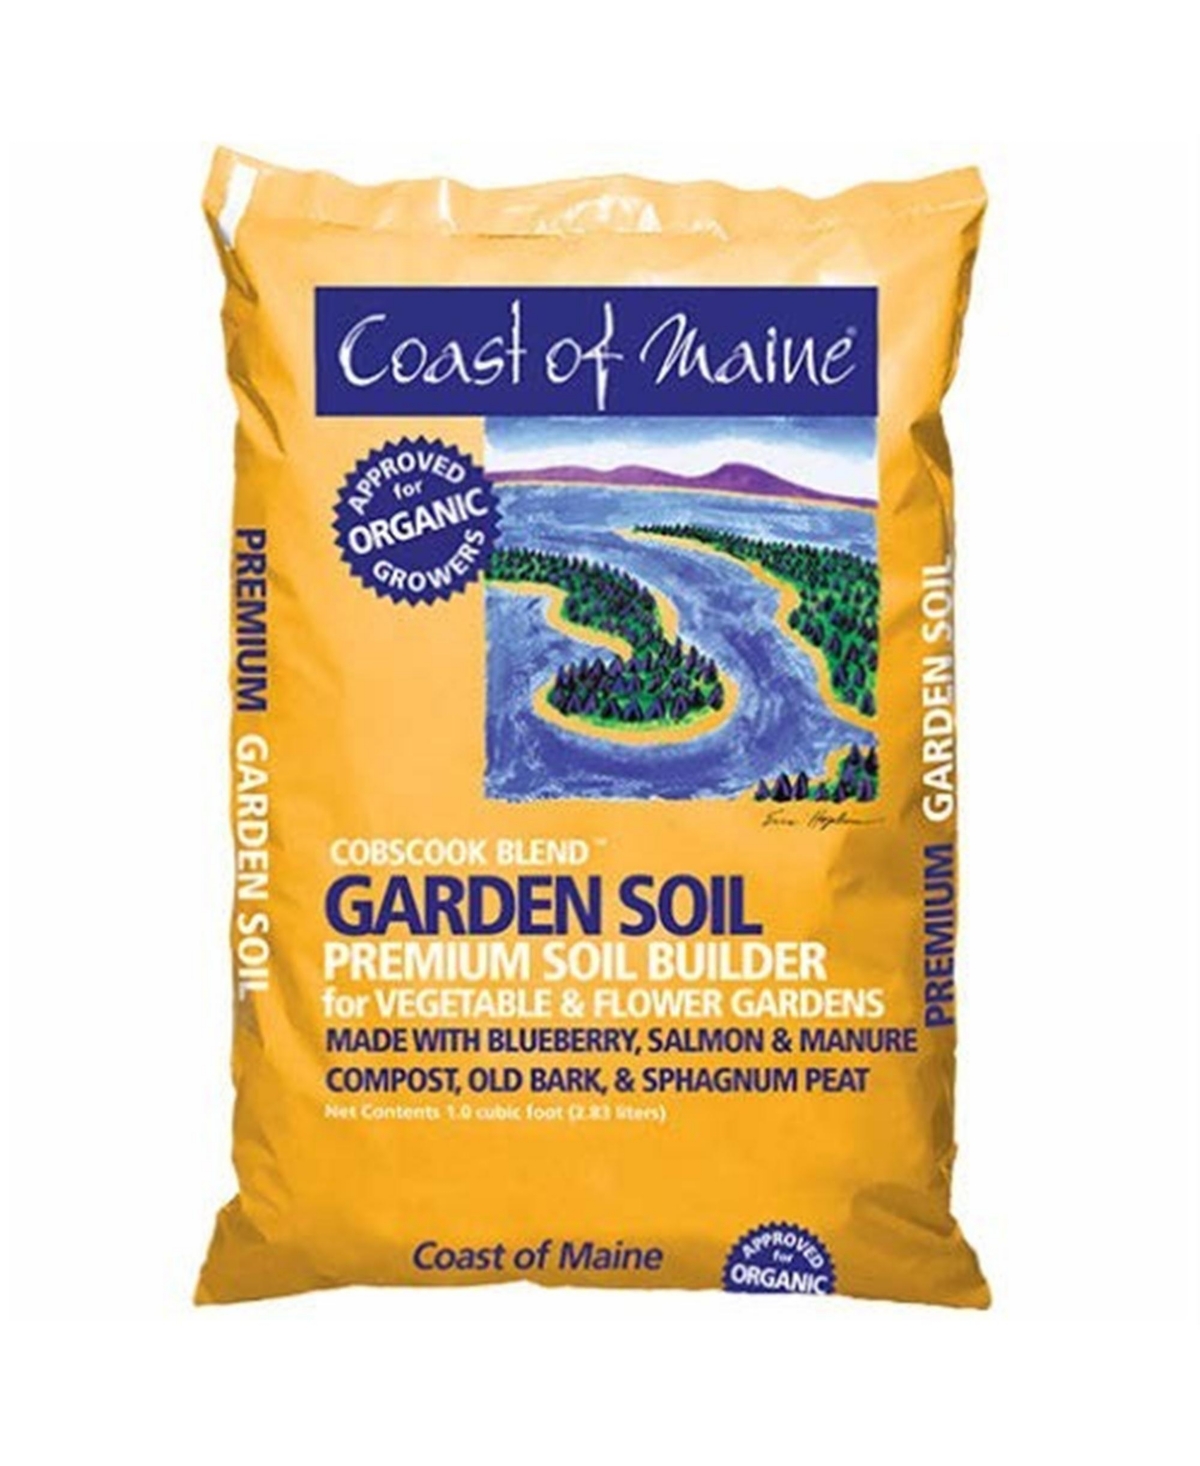 Cobscook Blend Garden Soil, 1 cu ft - Open Miscellaneous